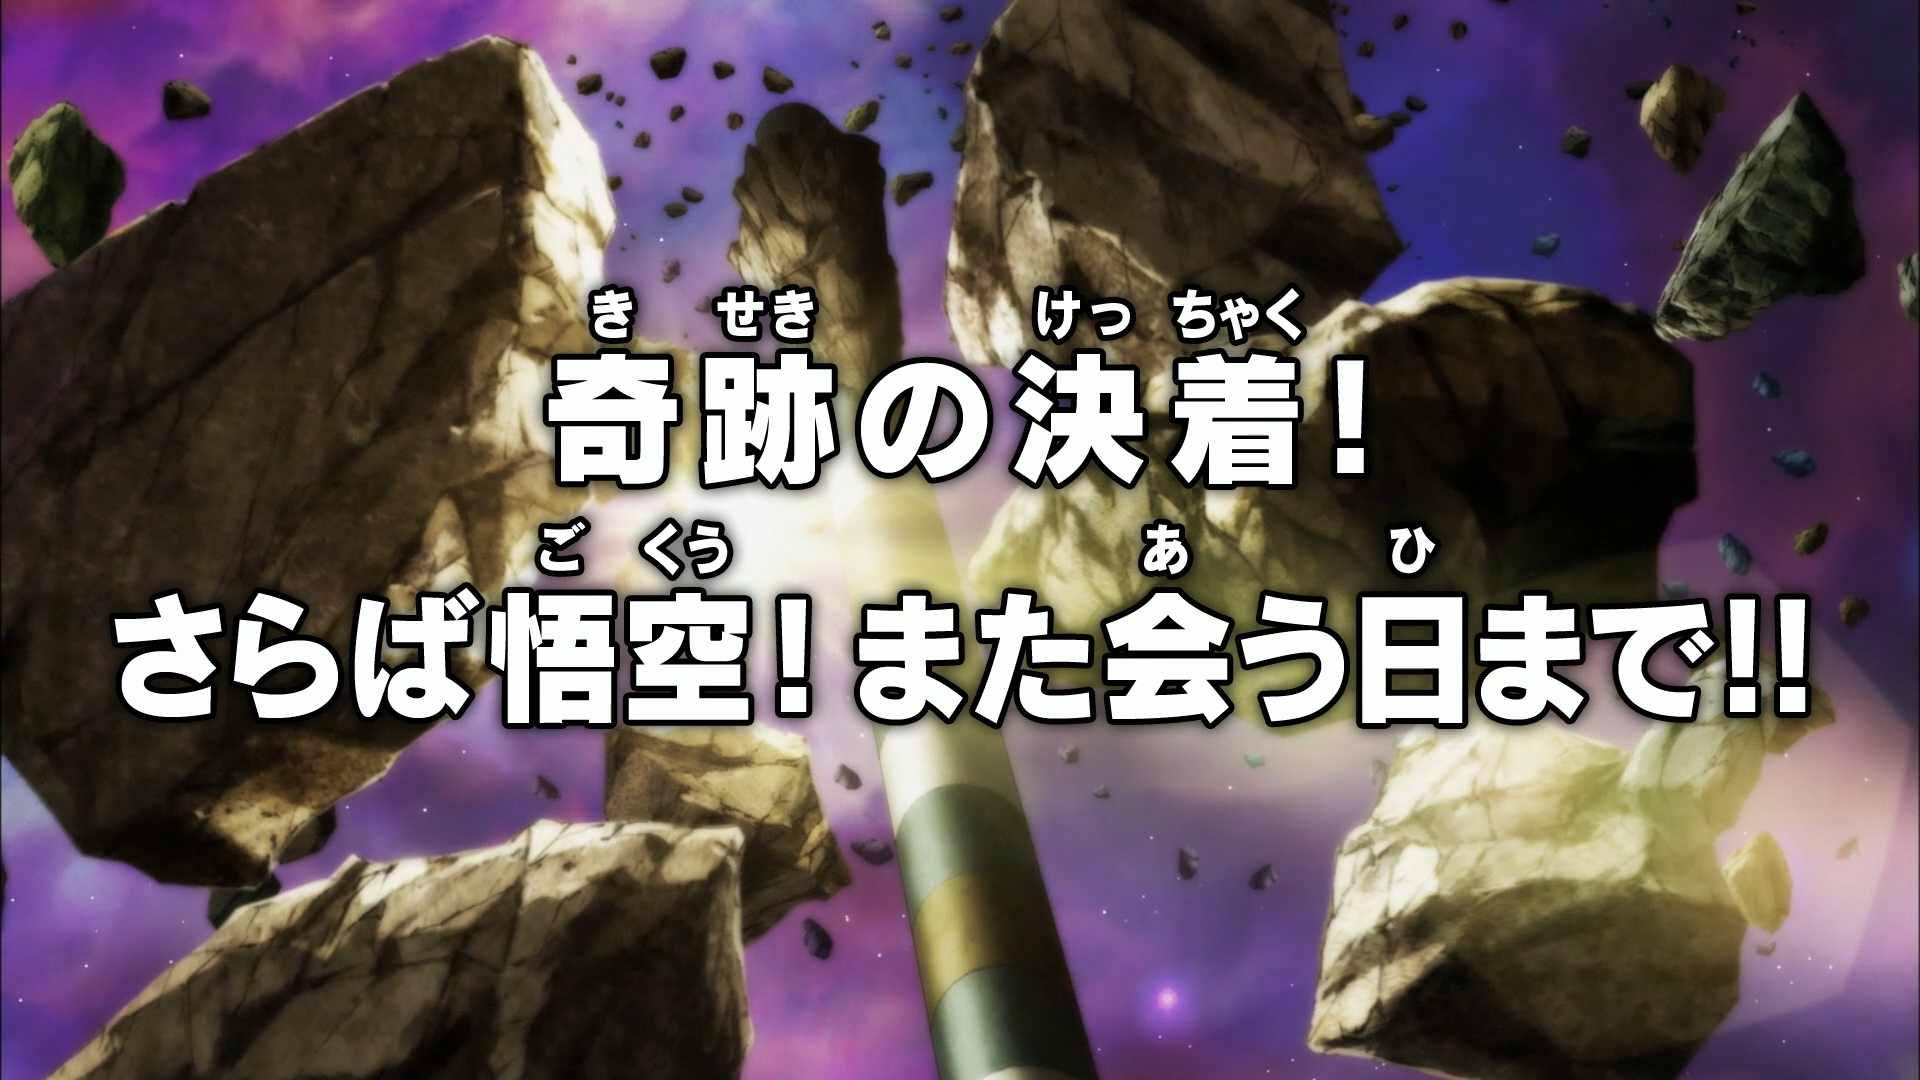 Dragon Ball Super Episode 131: The Miraculous Conclusion